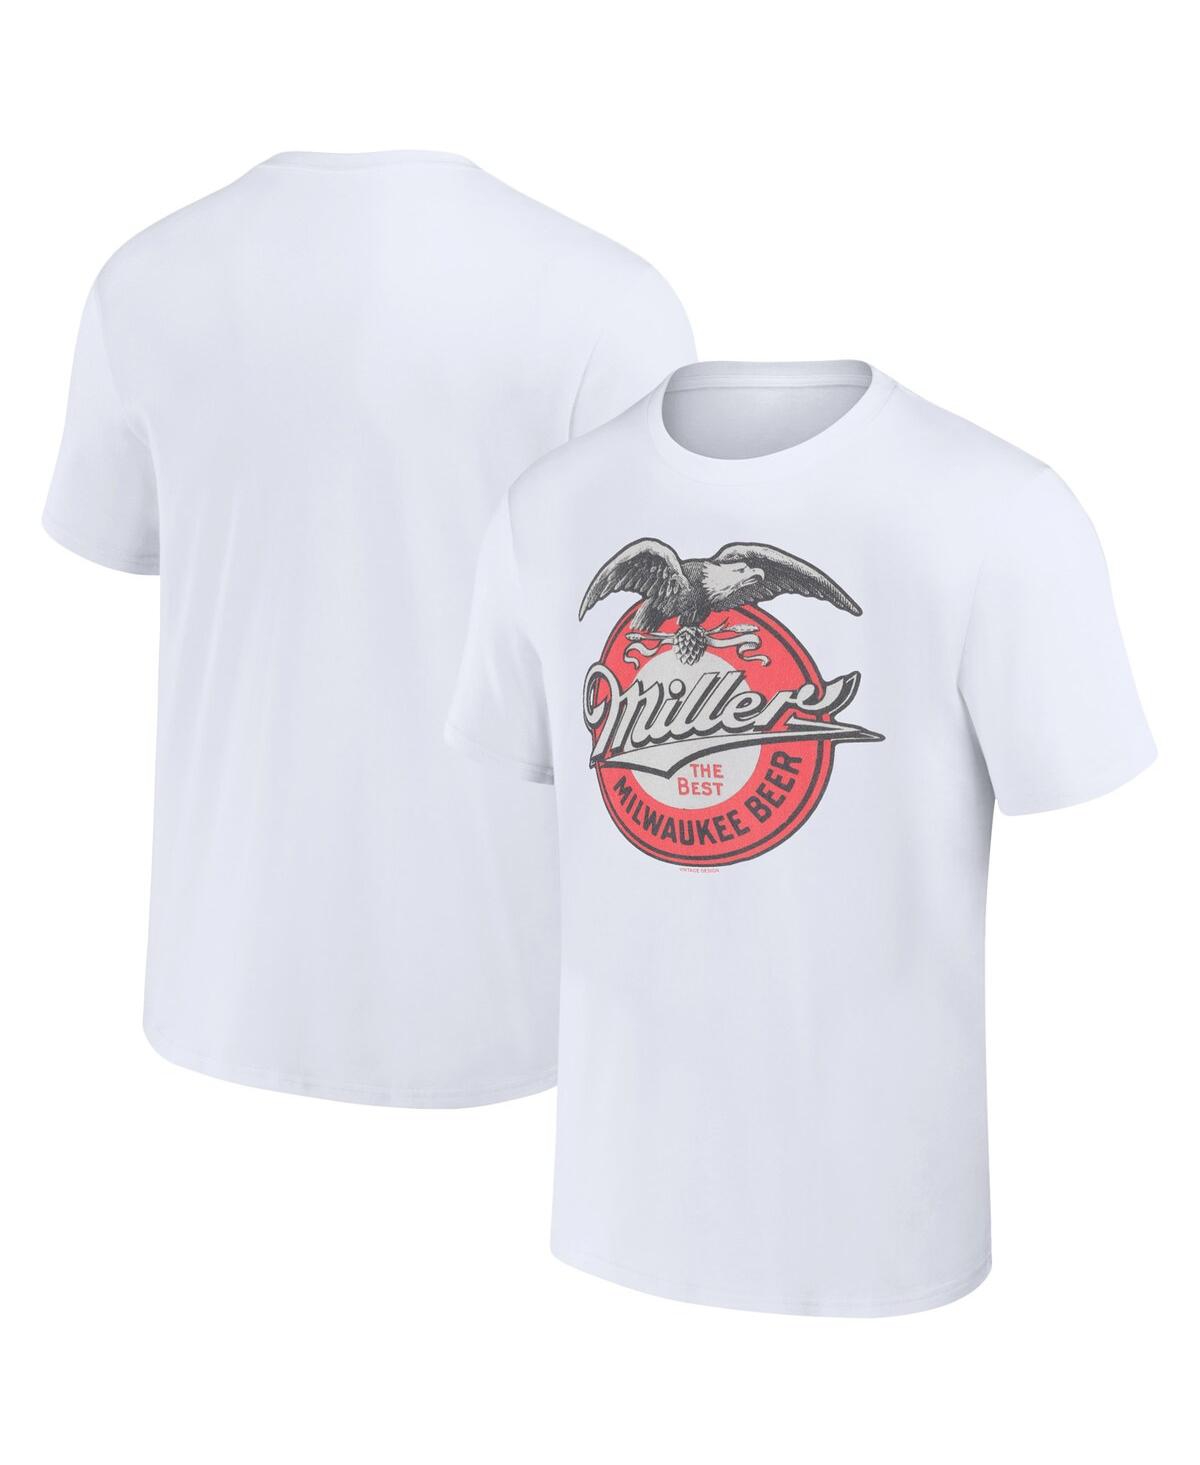 Men's and Women's Mad Engine White Miller Retro Label T-shirt - White